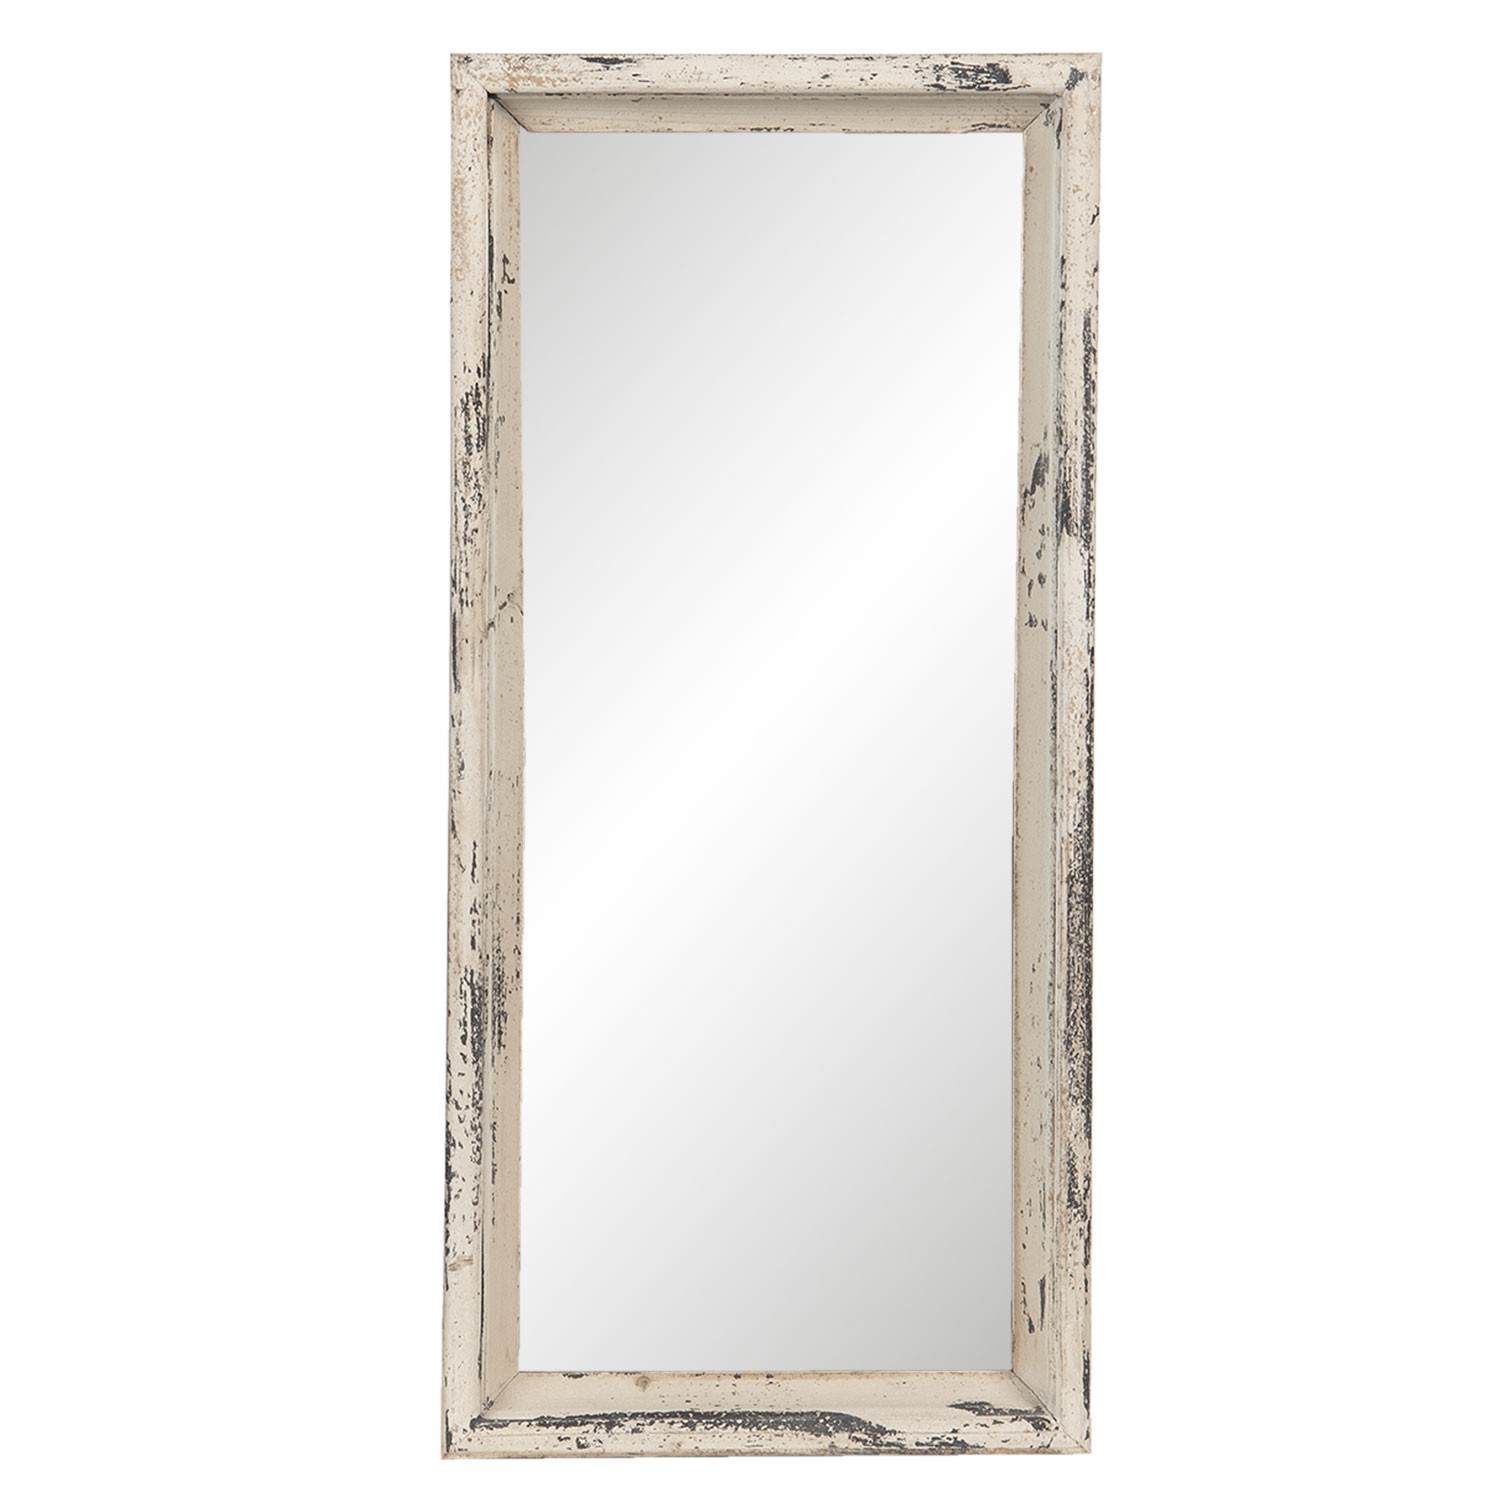 Vintage zrcadlo v bílém rámu s patinou Veillantif - 26*4*57 cm 52S202